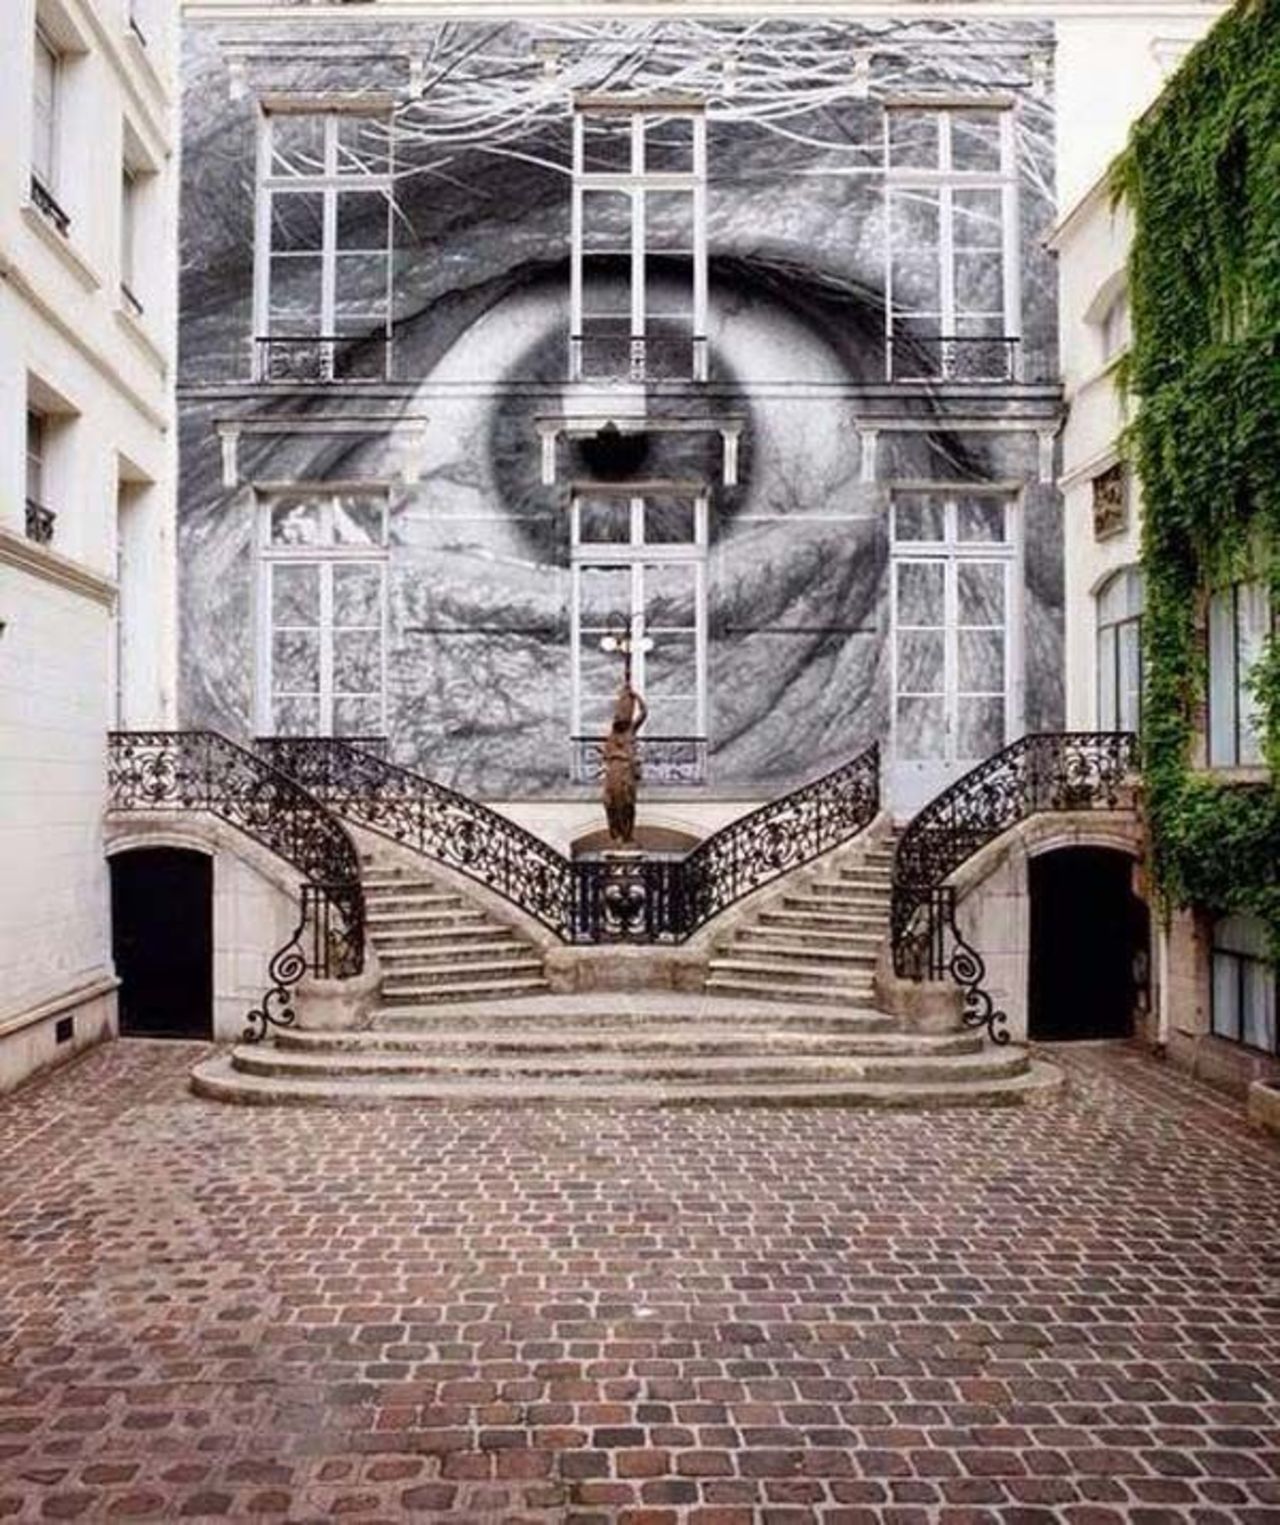 Mural in Paris, France by JR #streetart #mural #graffiti #art https://t.co/EFgCbsnQVR